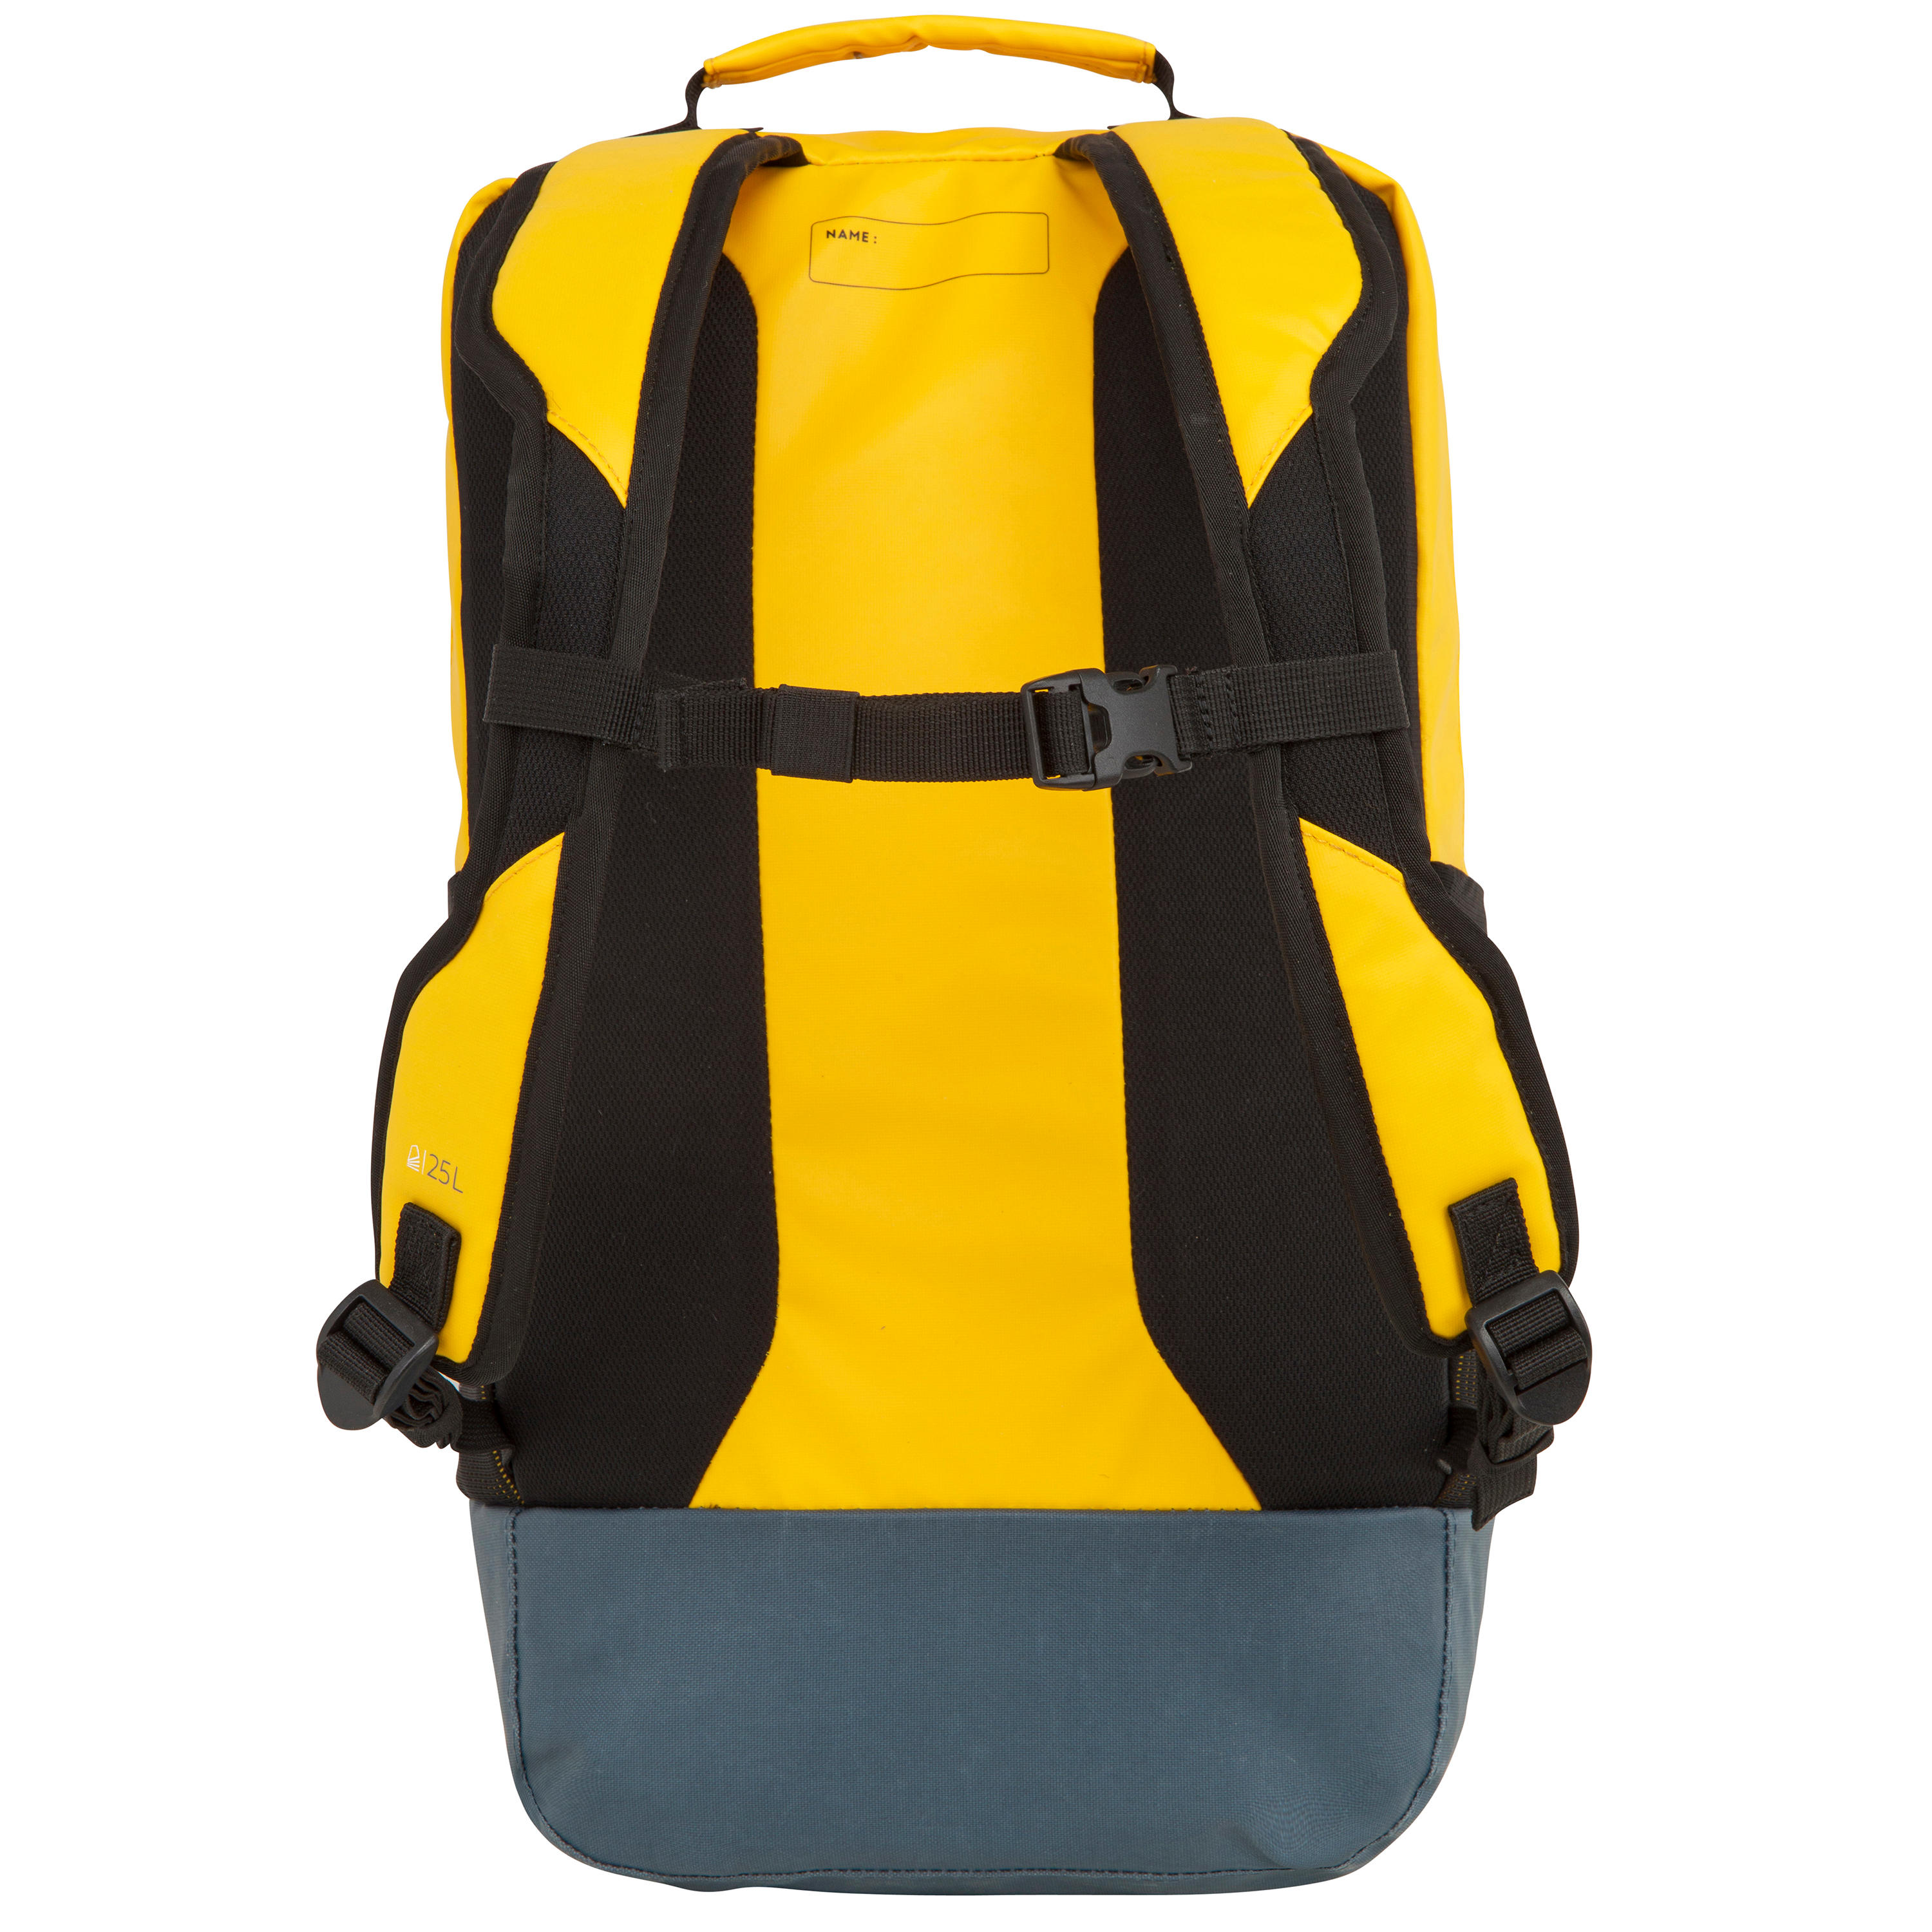 Waterproof backpack 25 litres - Yellow 5/13